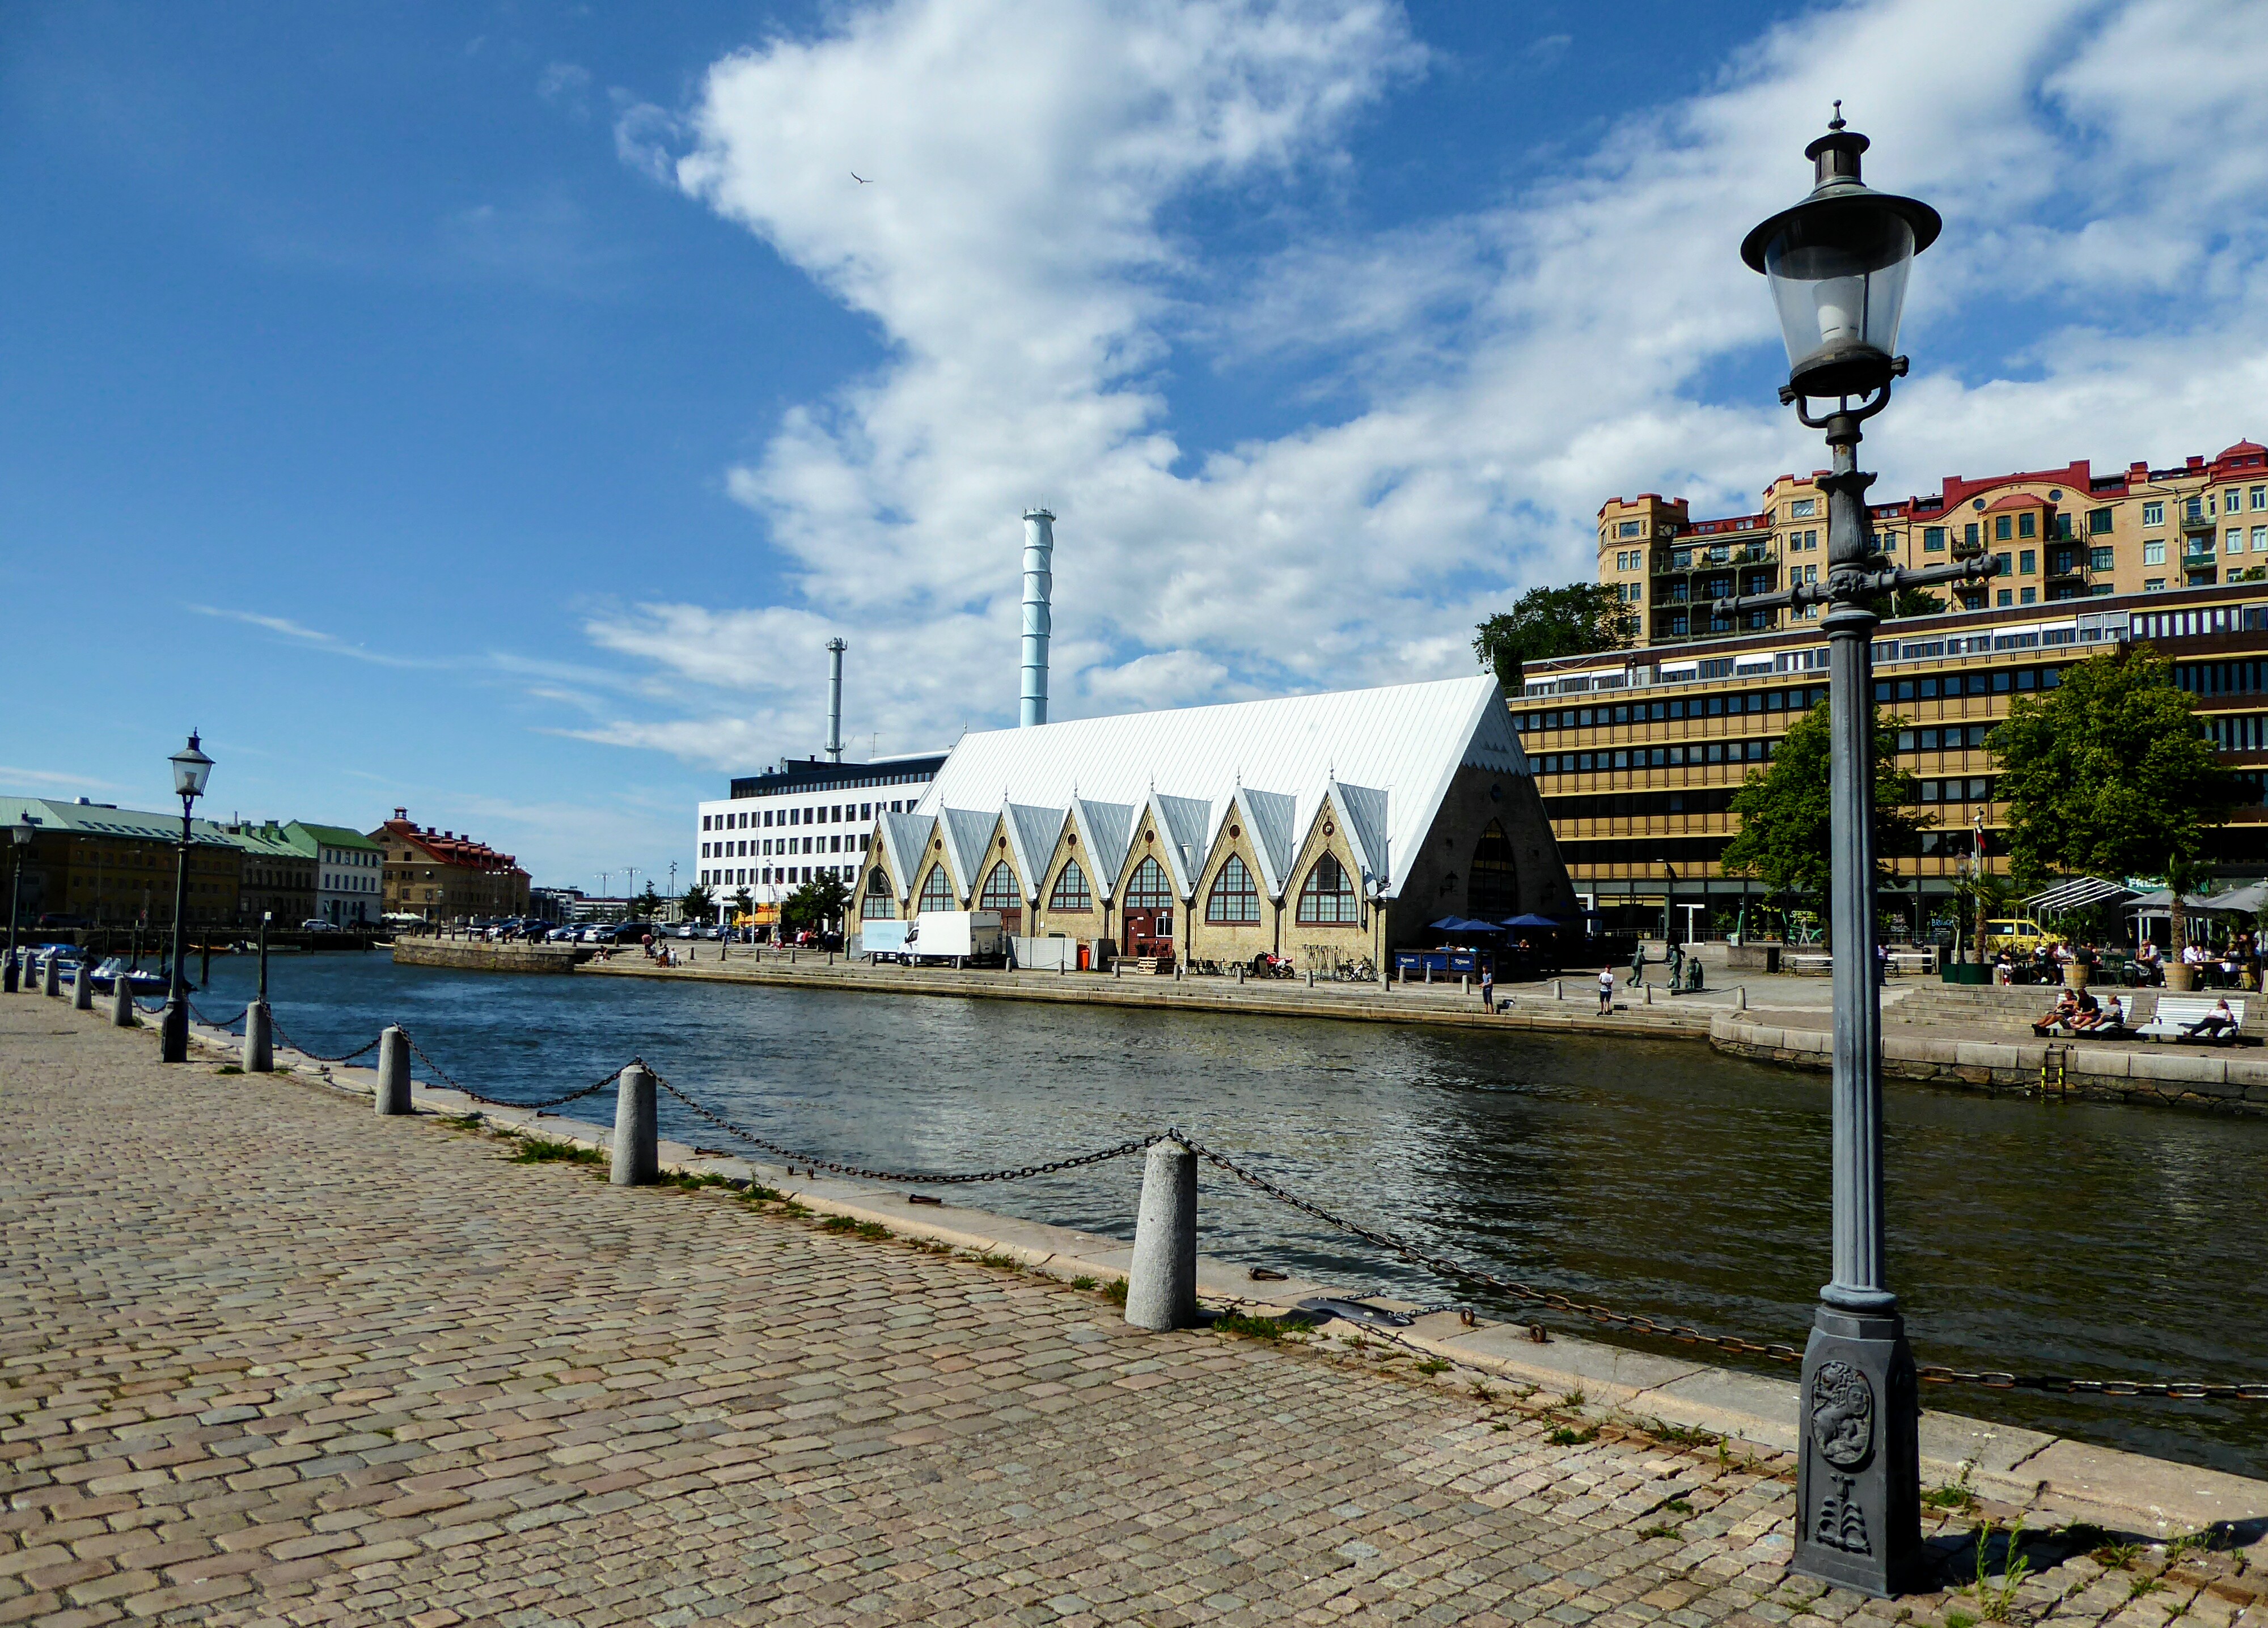 Göteborg 